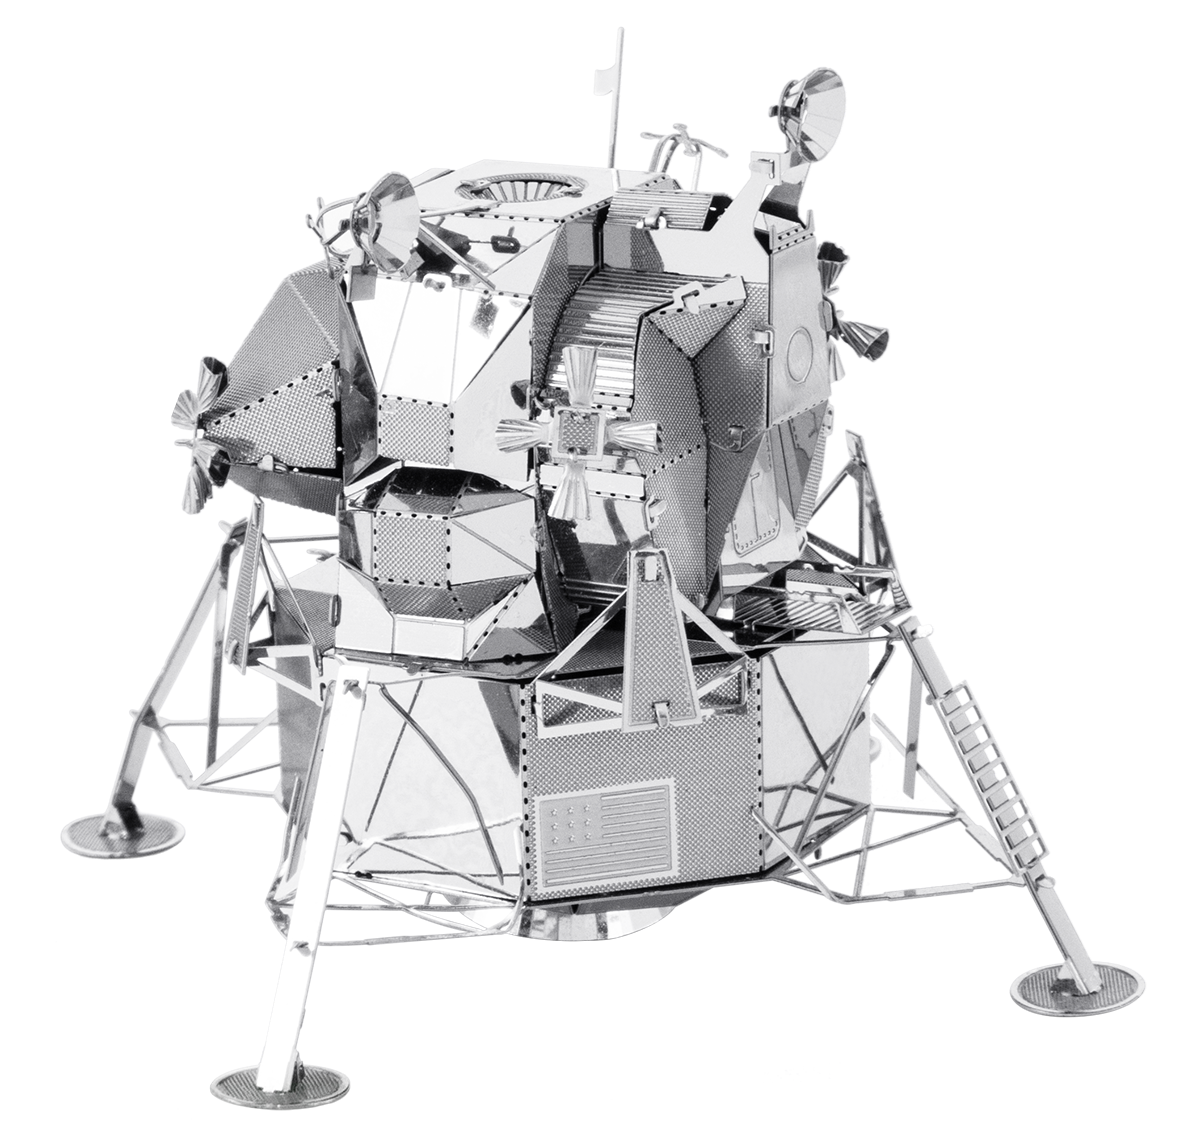 Apollo Lunar Module Metal Earth